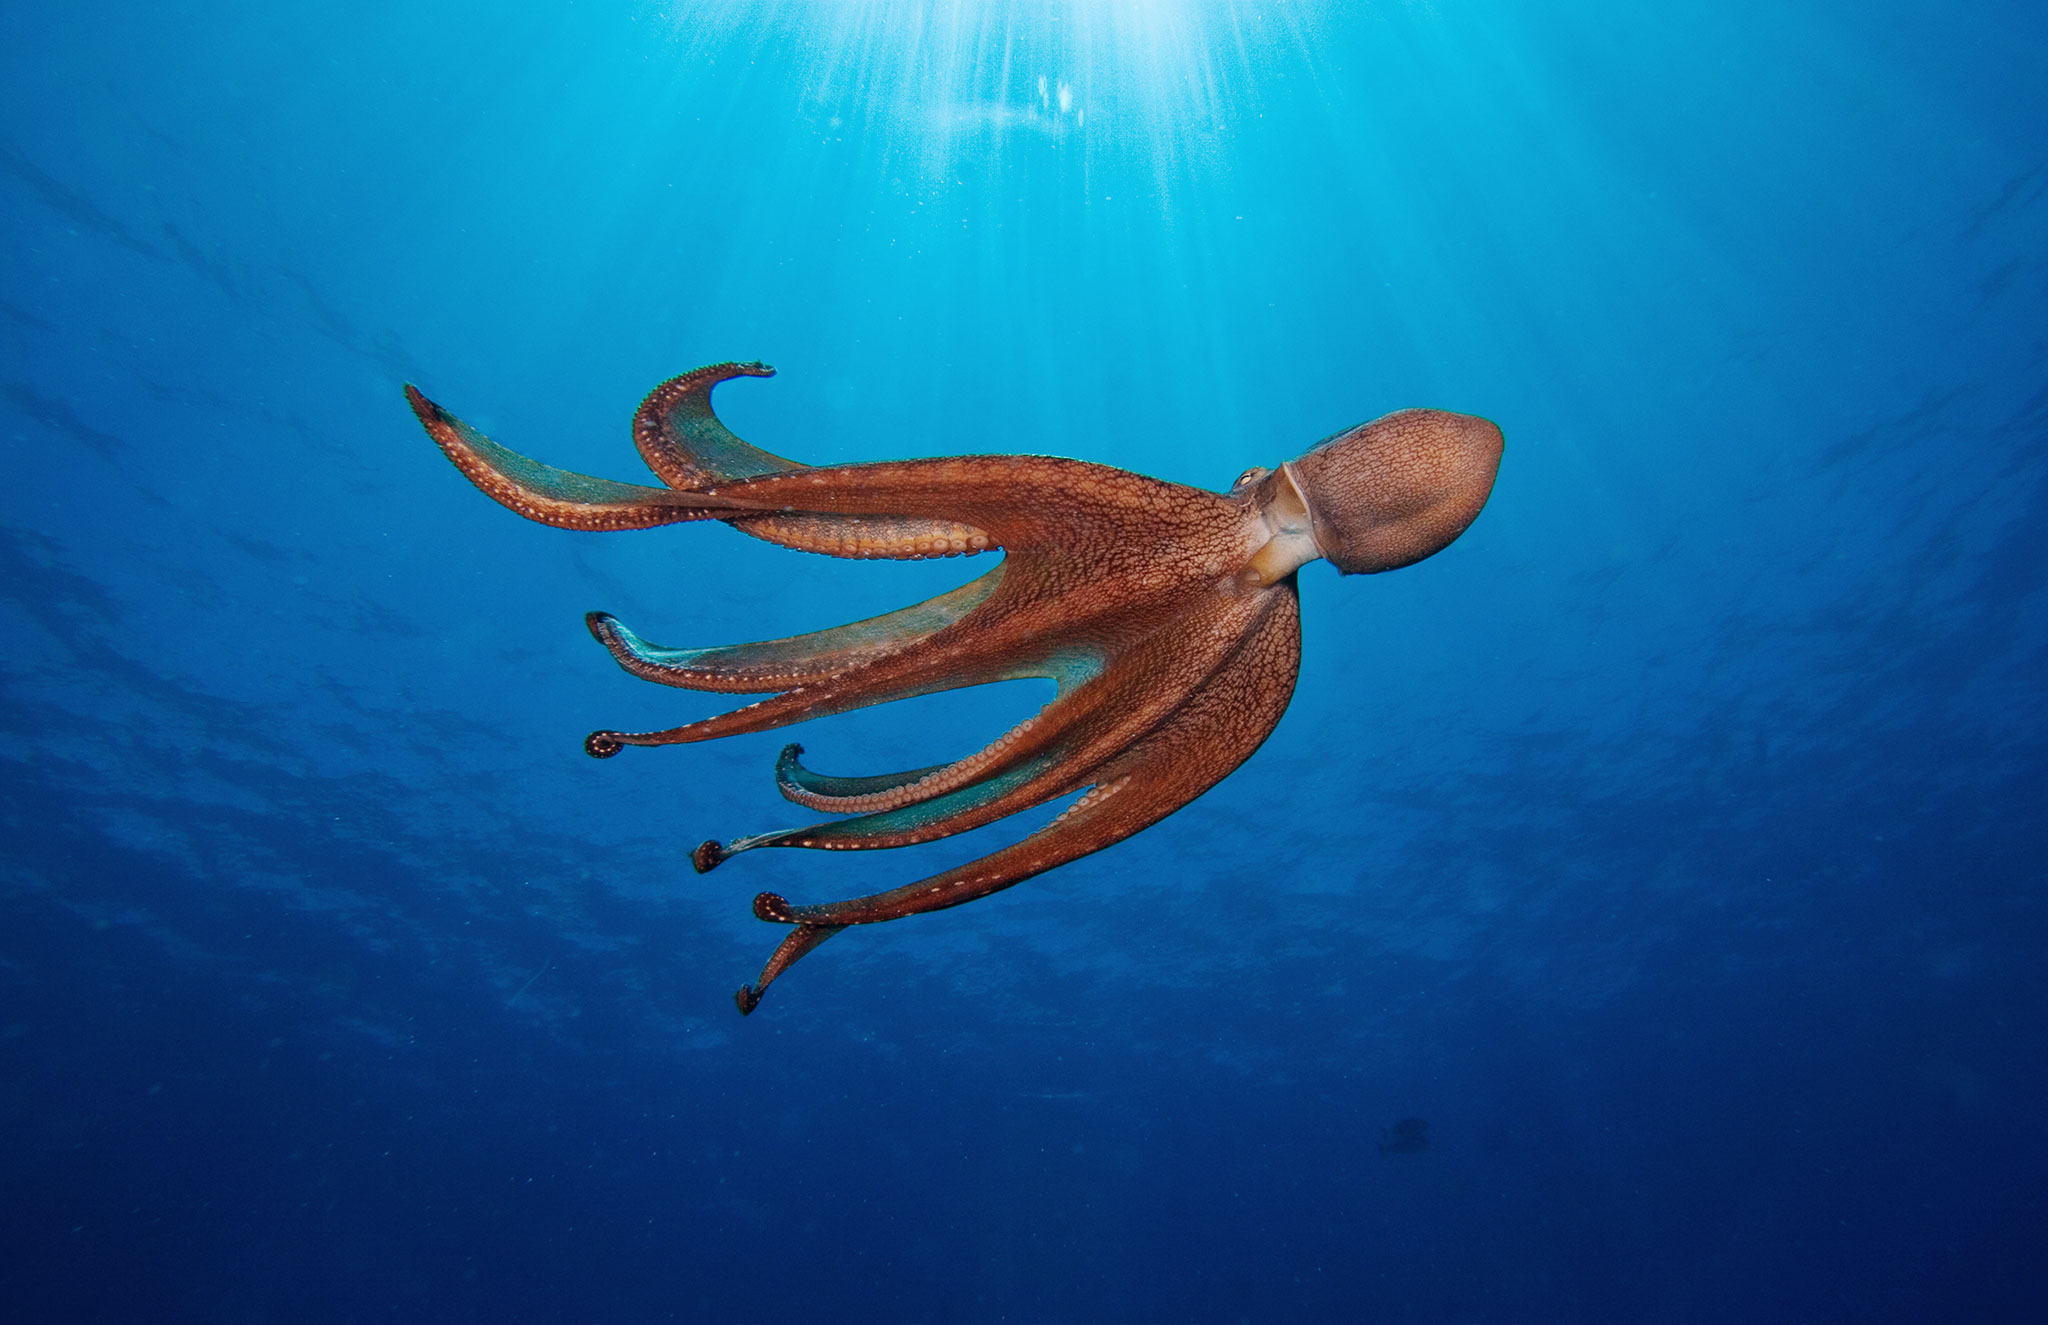 Octopus #21